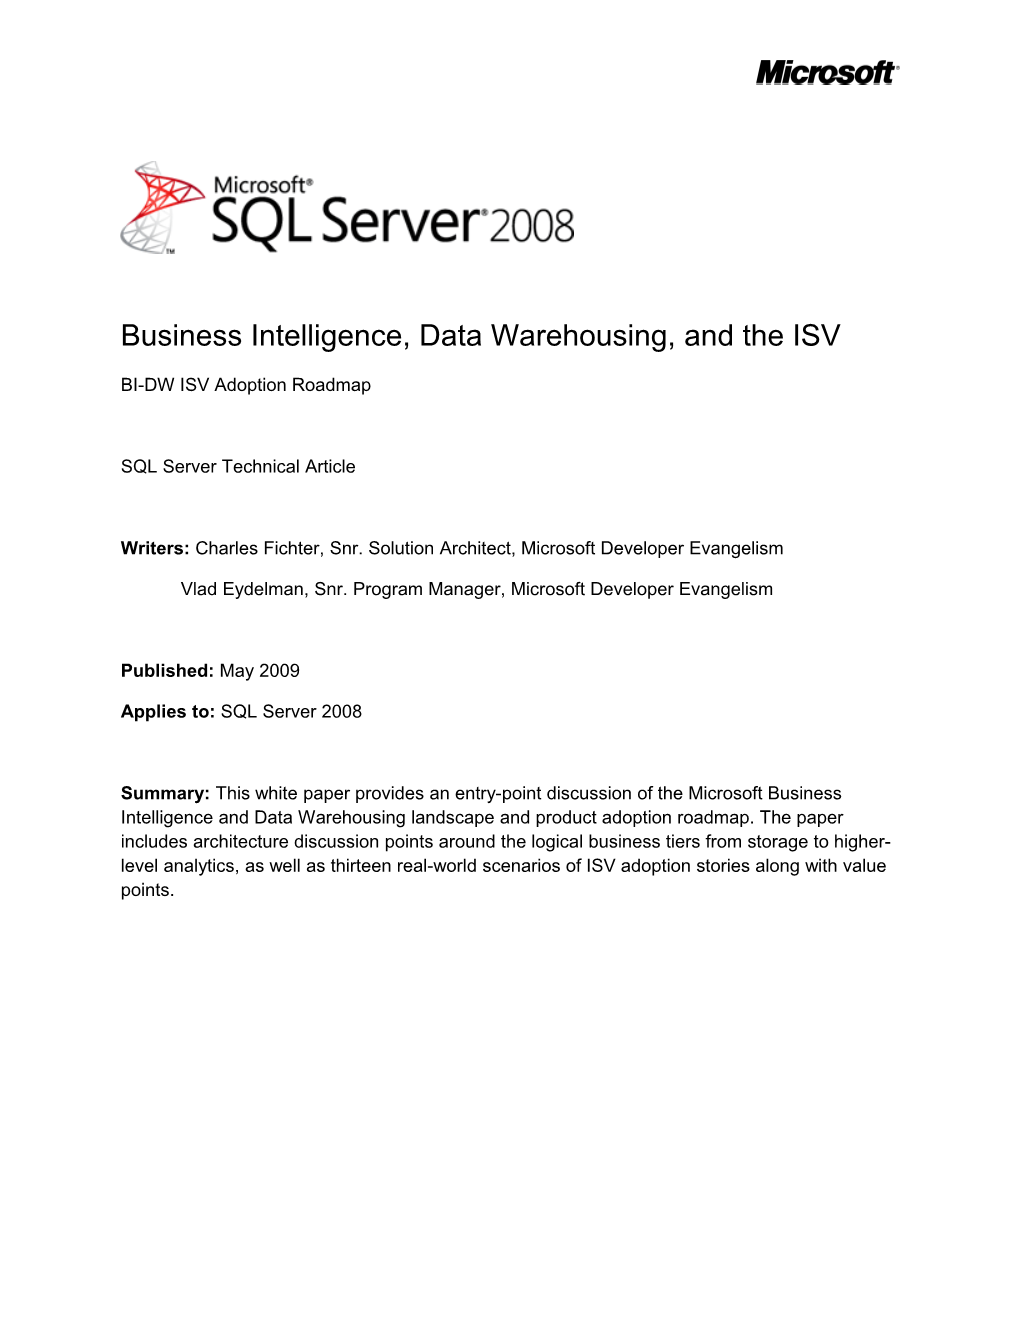 Business Intelligence, Data Warehousing and the ISV